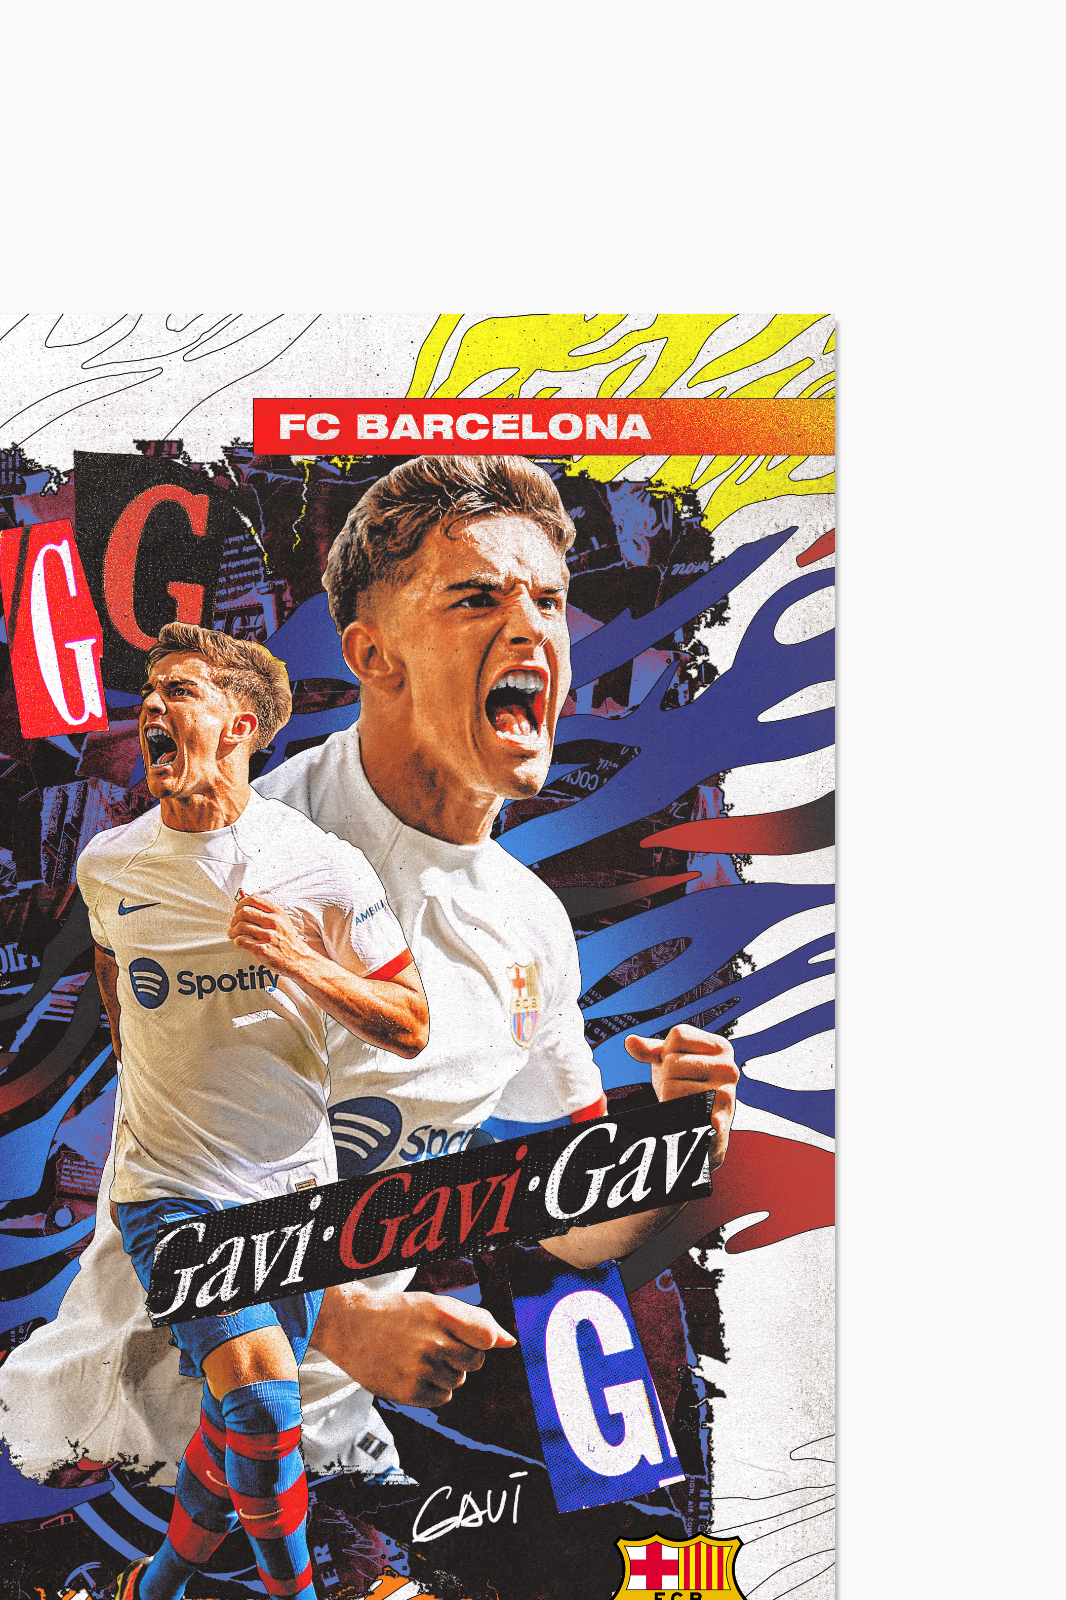 FC Barcelona - Poster Gavi 999 exemplaires